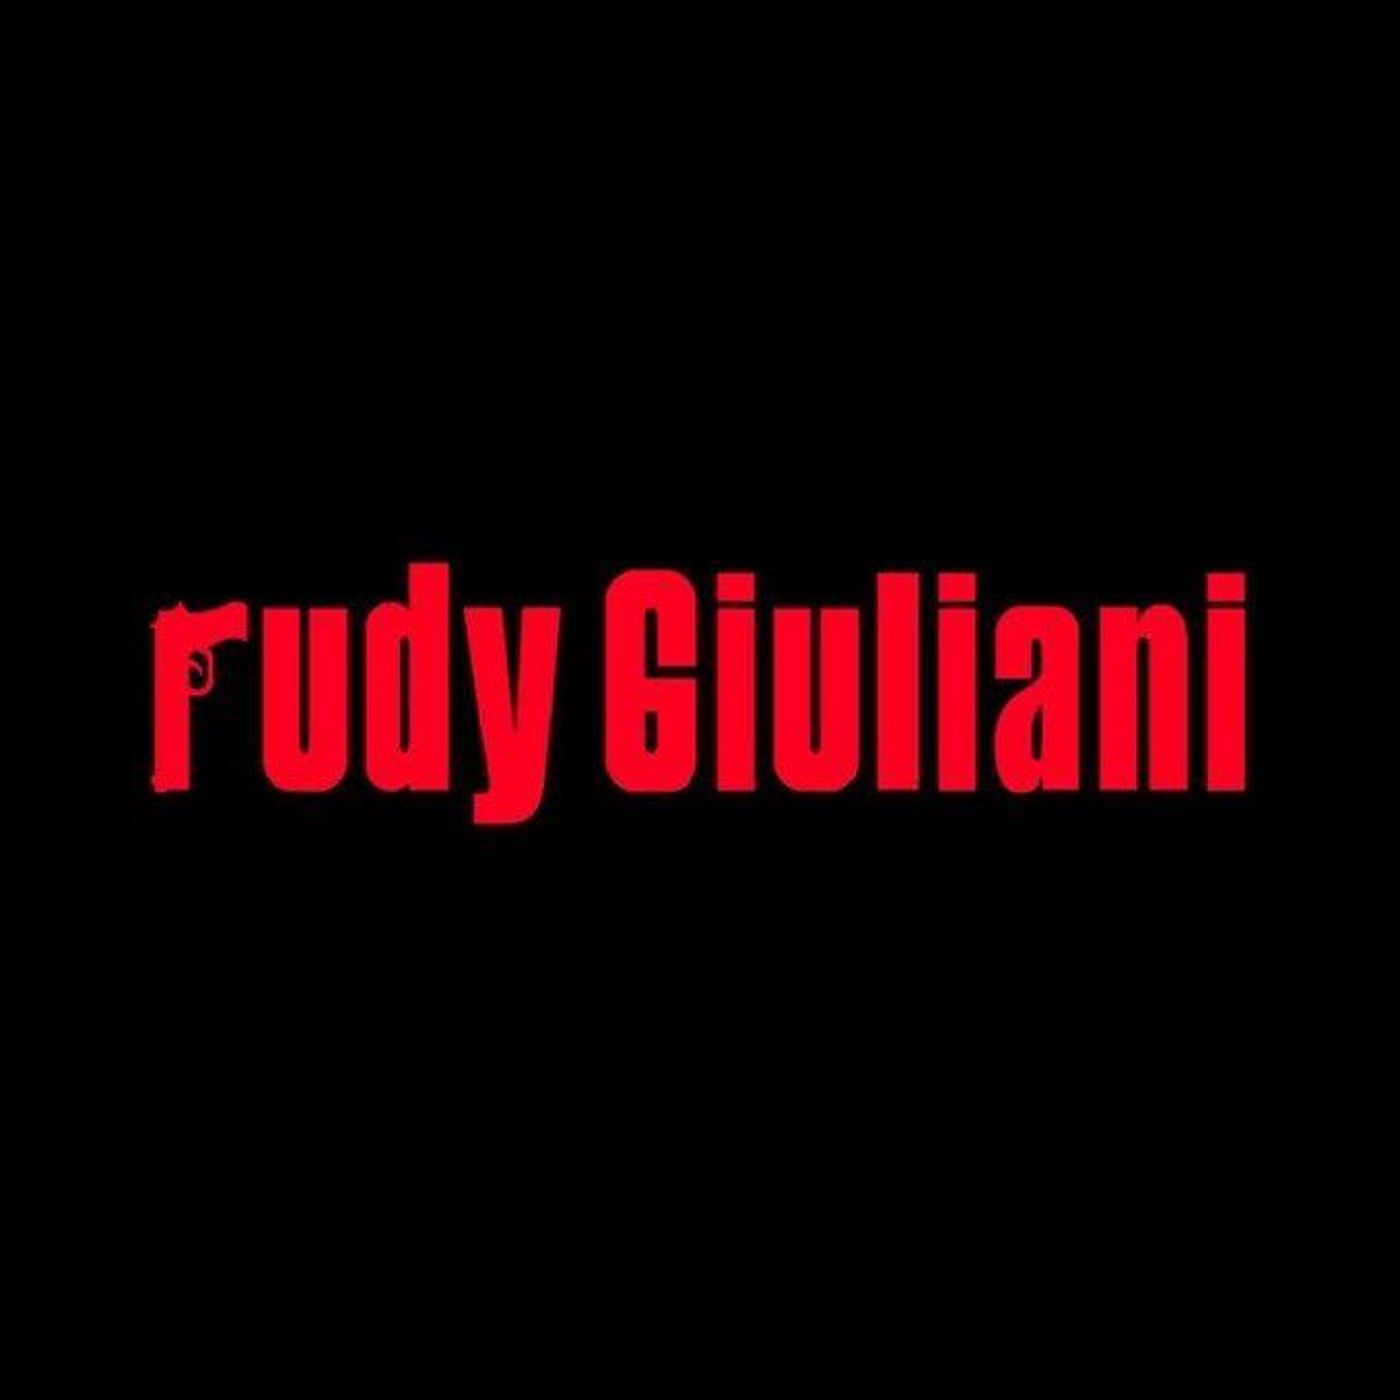 Real Rudy Giuliani